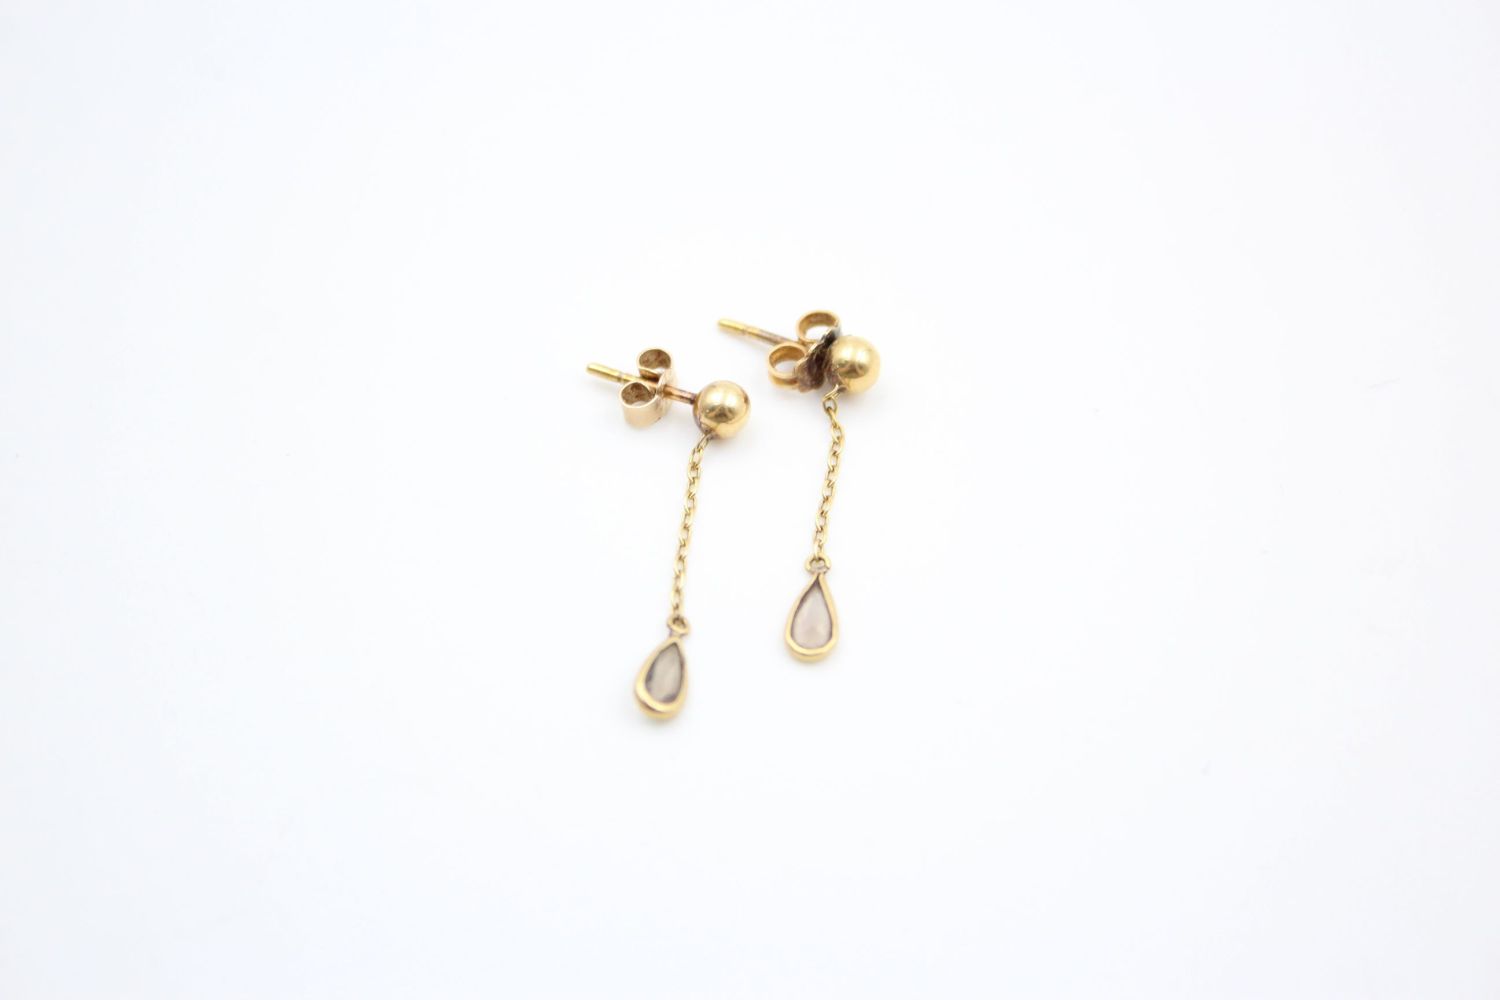 3 x 9ct gold gemstone stud earrings 2.9 grams gross - Image 8 of 11